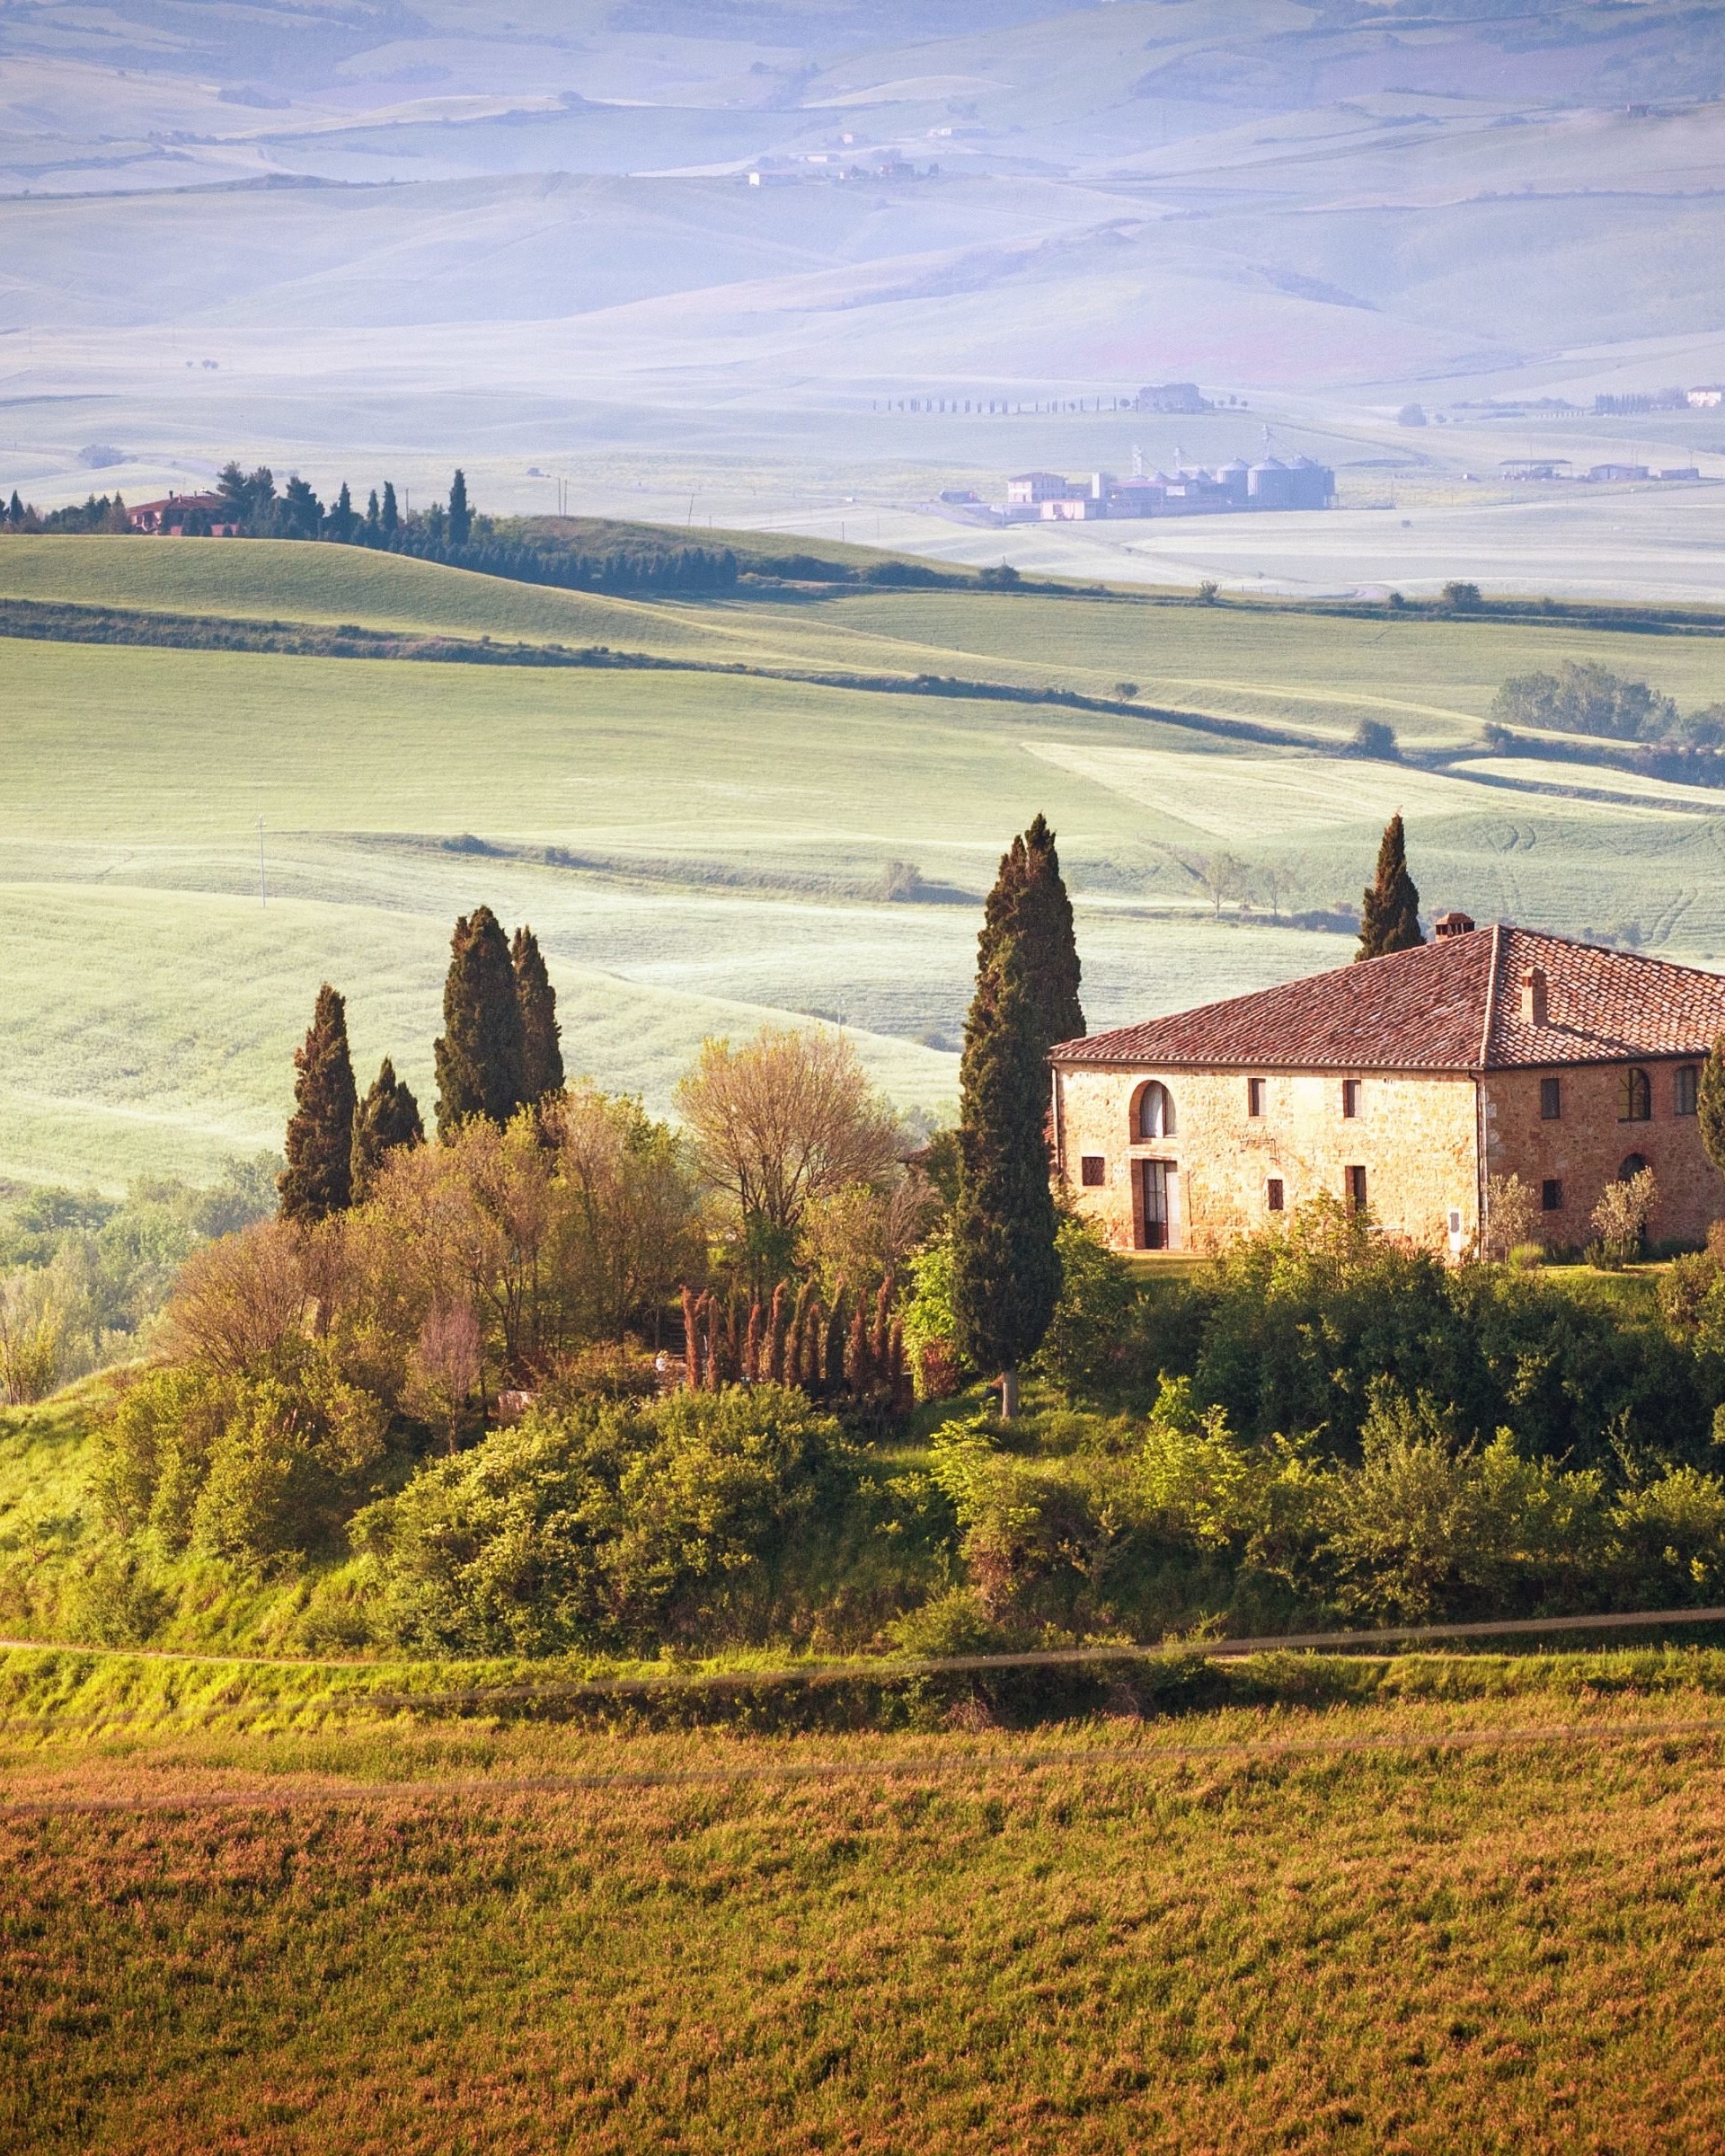 Summer in Tuscany, Italy Wallpaper for Google Nexus 7